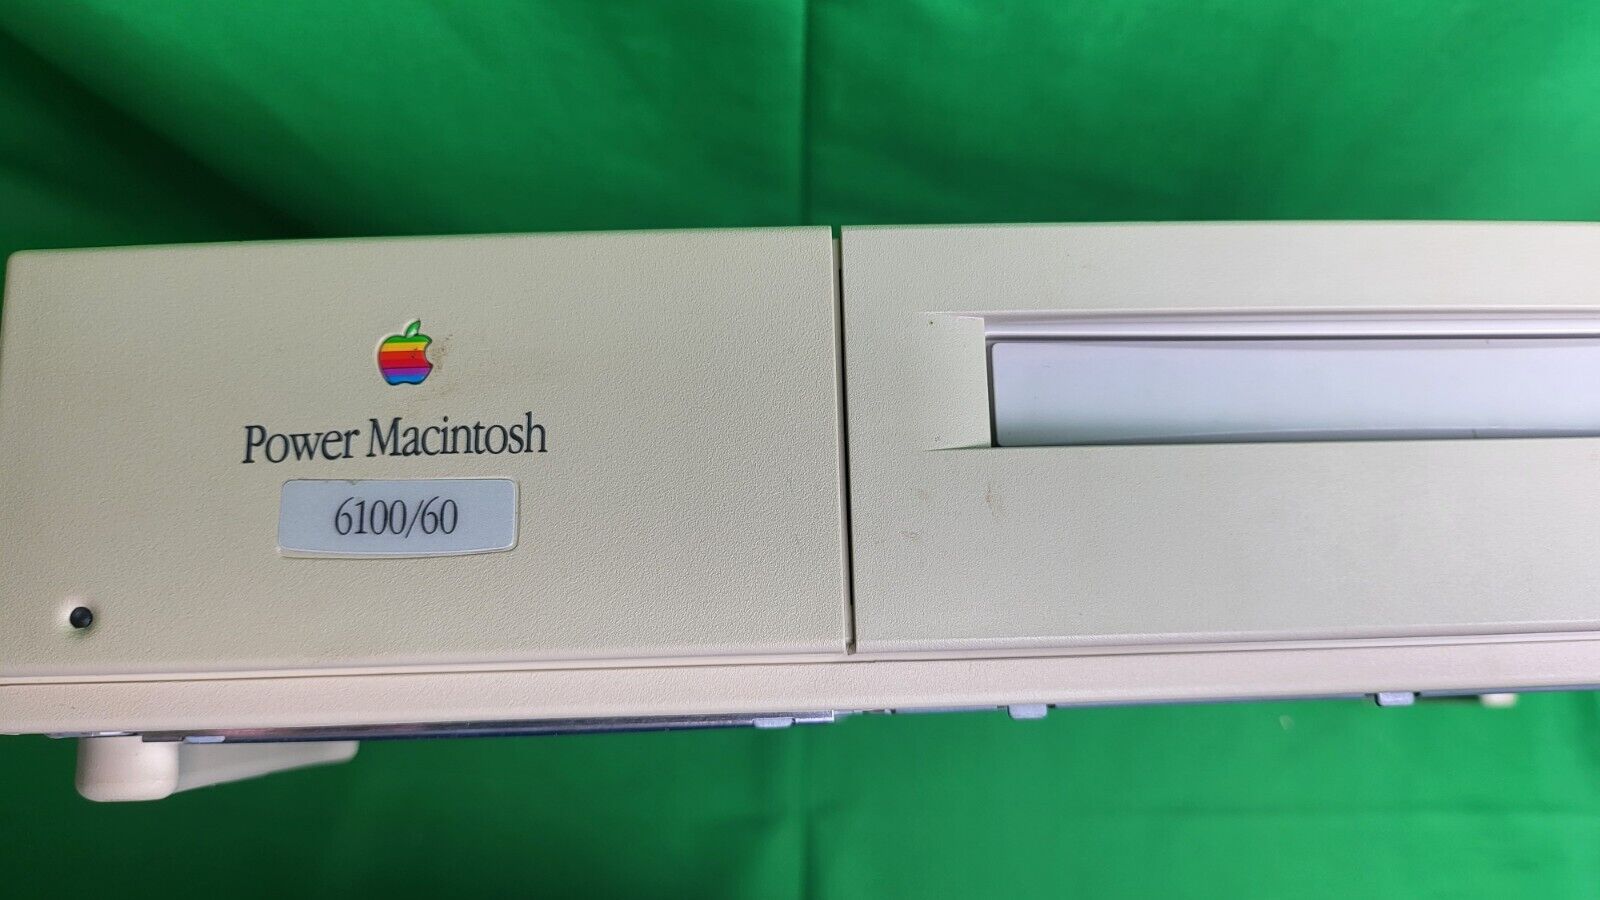 VTG Apple Power Macintosh 6100/66 Computer Powers On Chimes Read Descrip